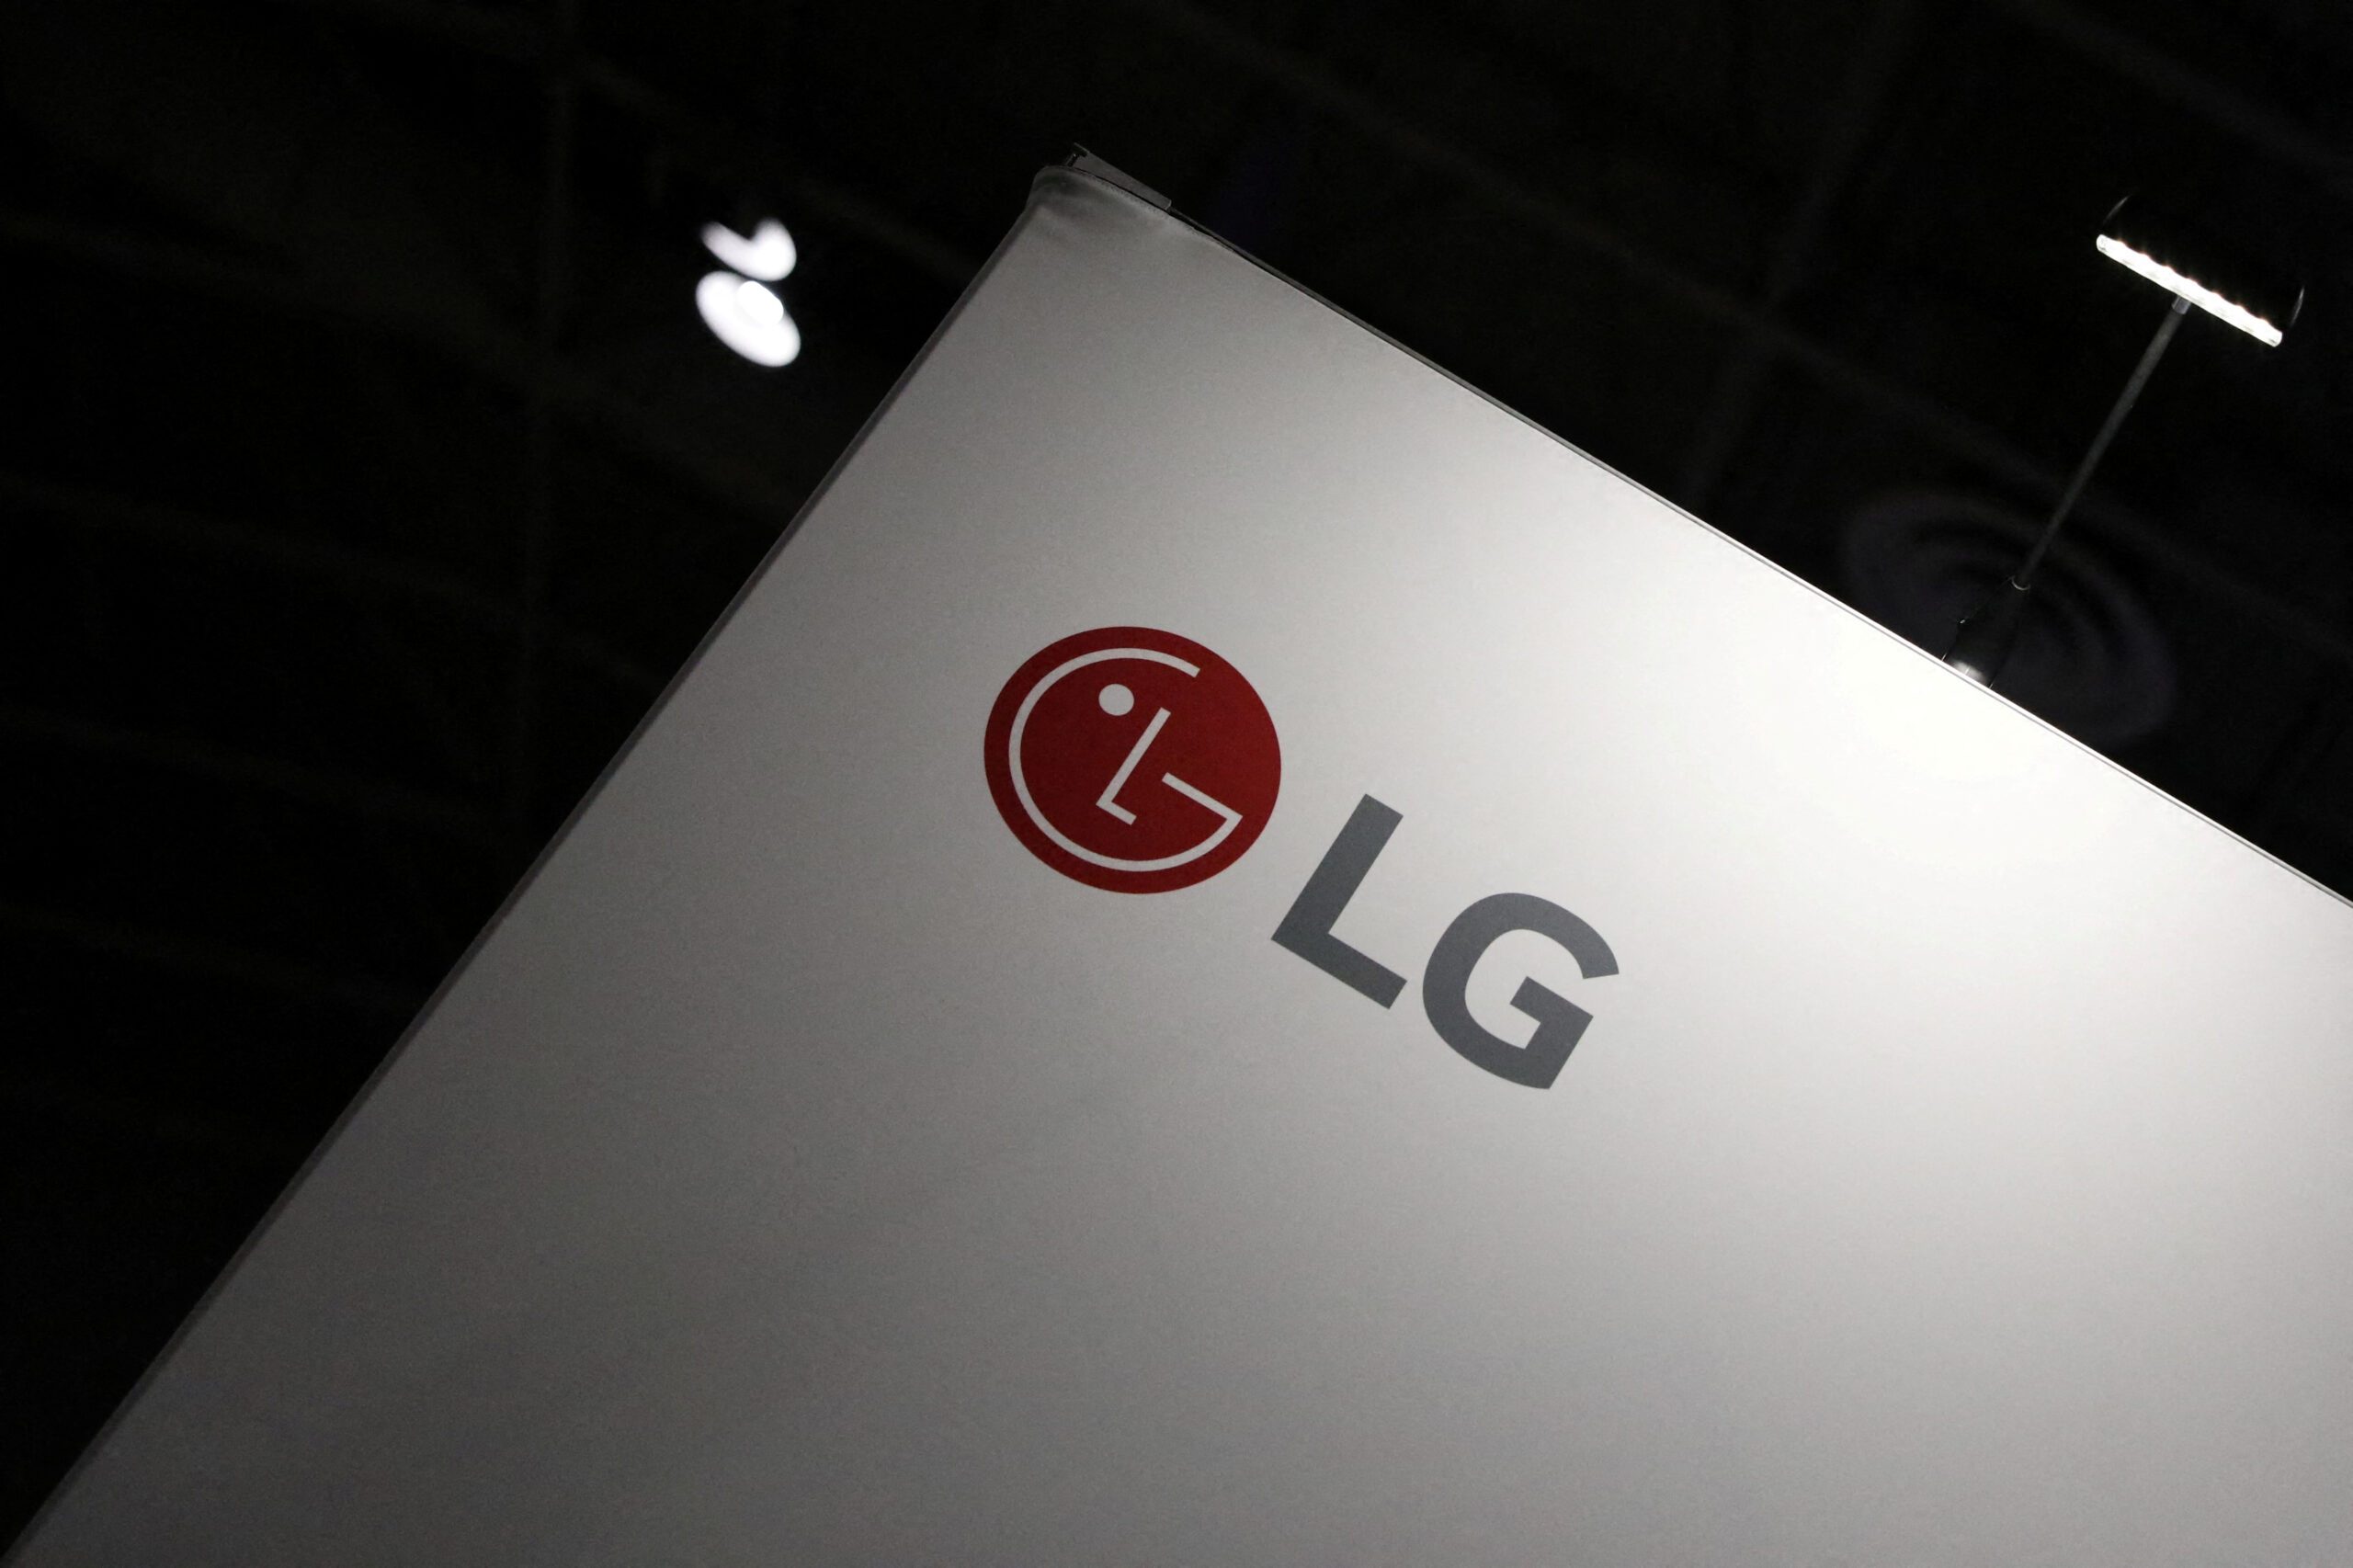 South Korea's LG Electronics raises $800m through dollar bond offering